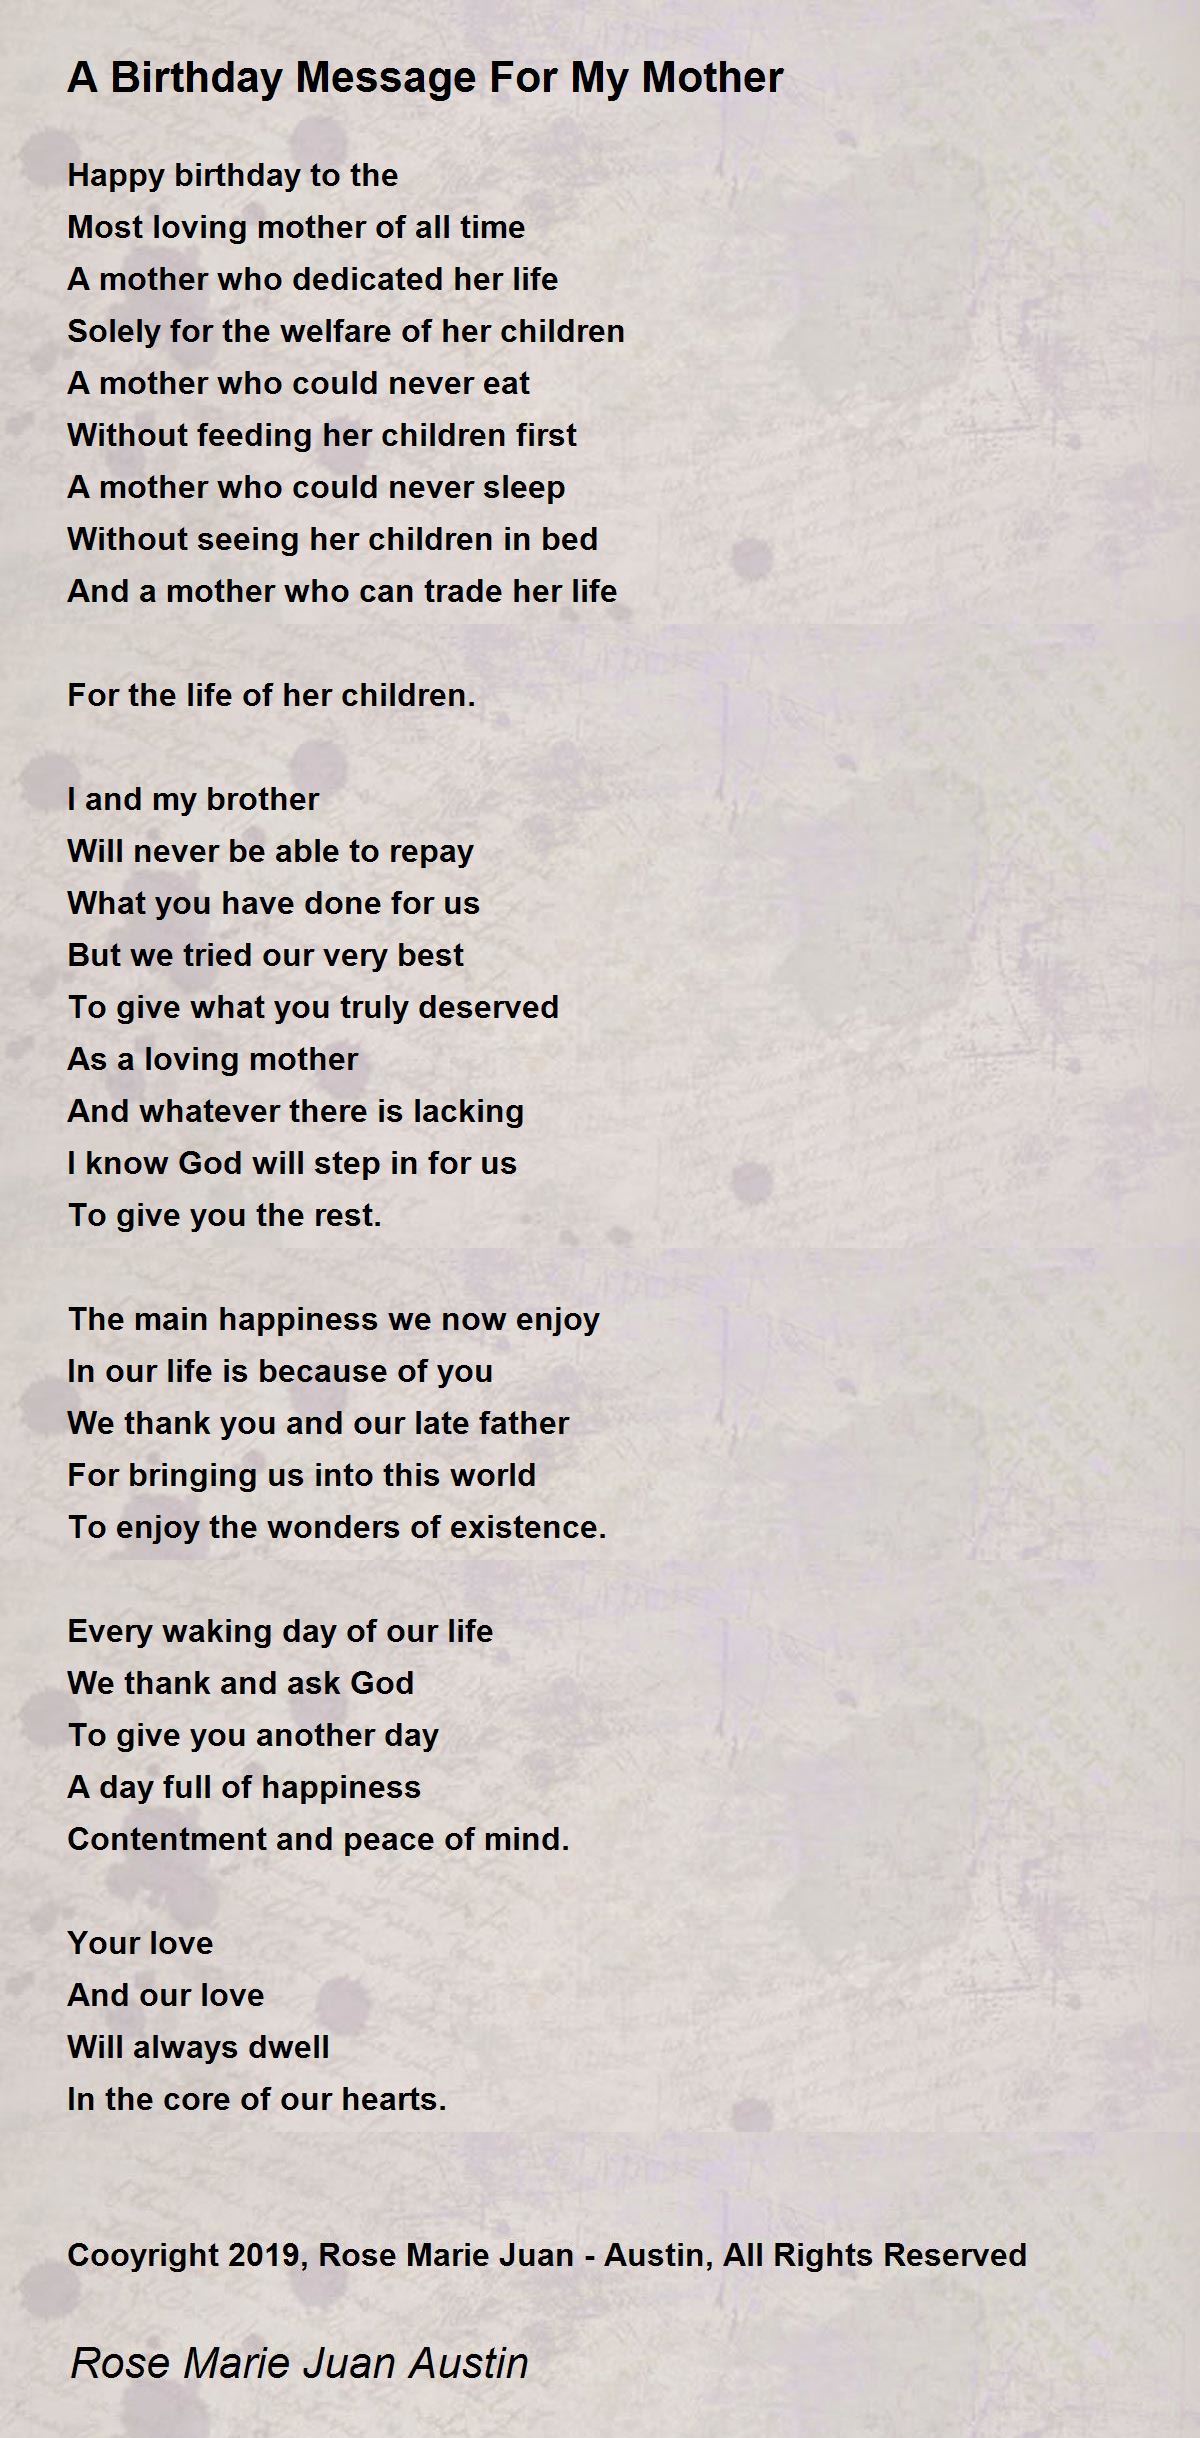 Poem dedicating to mom on her birthday